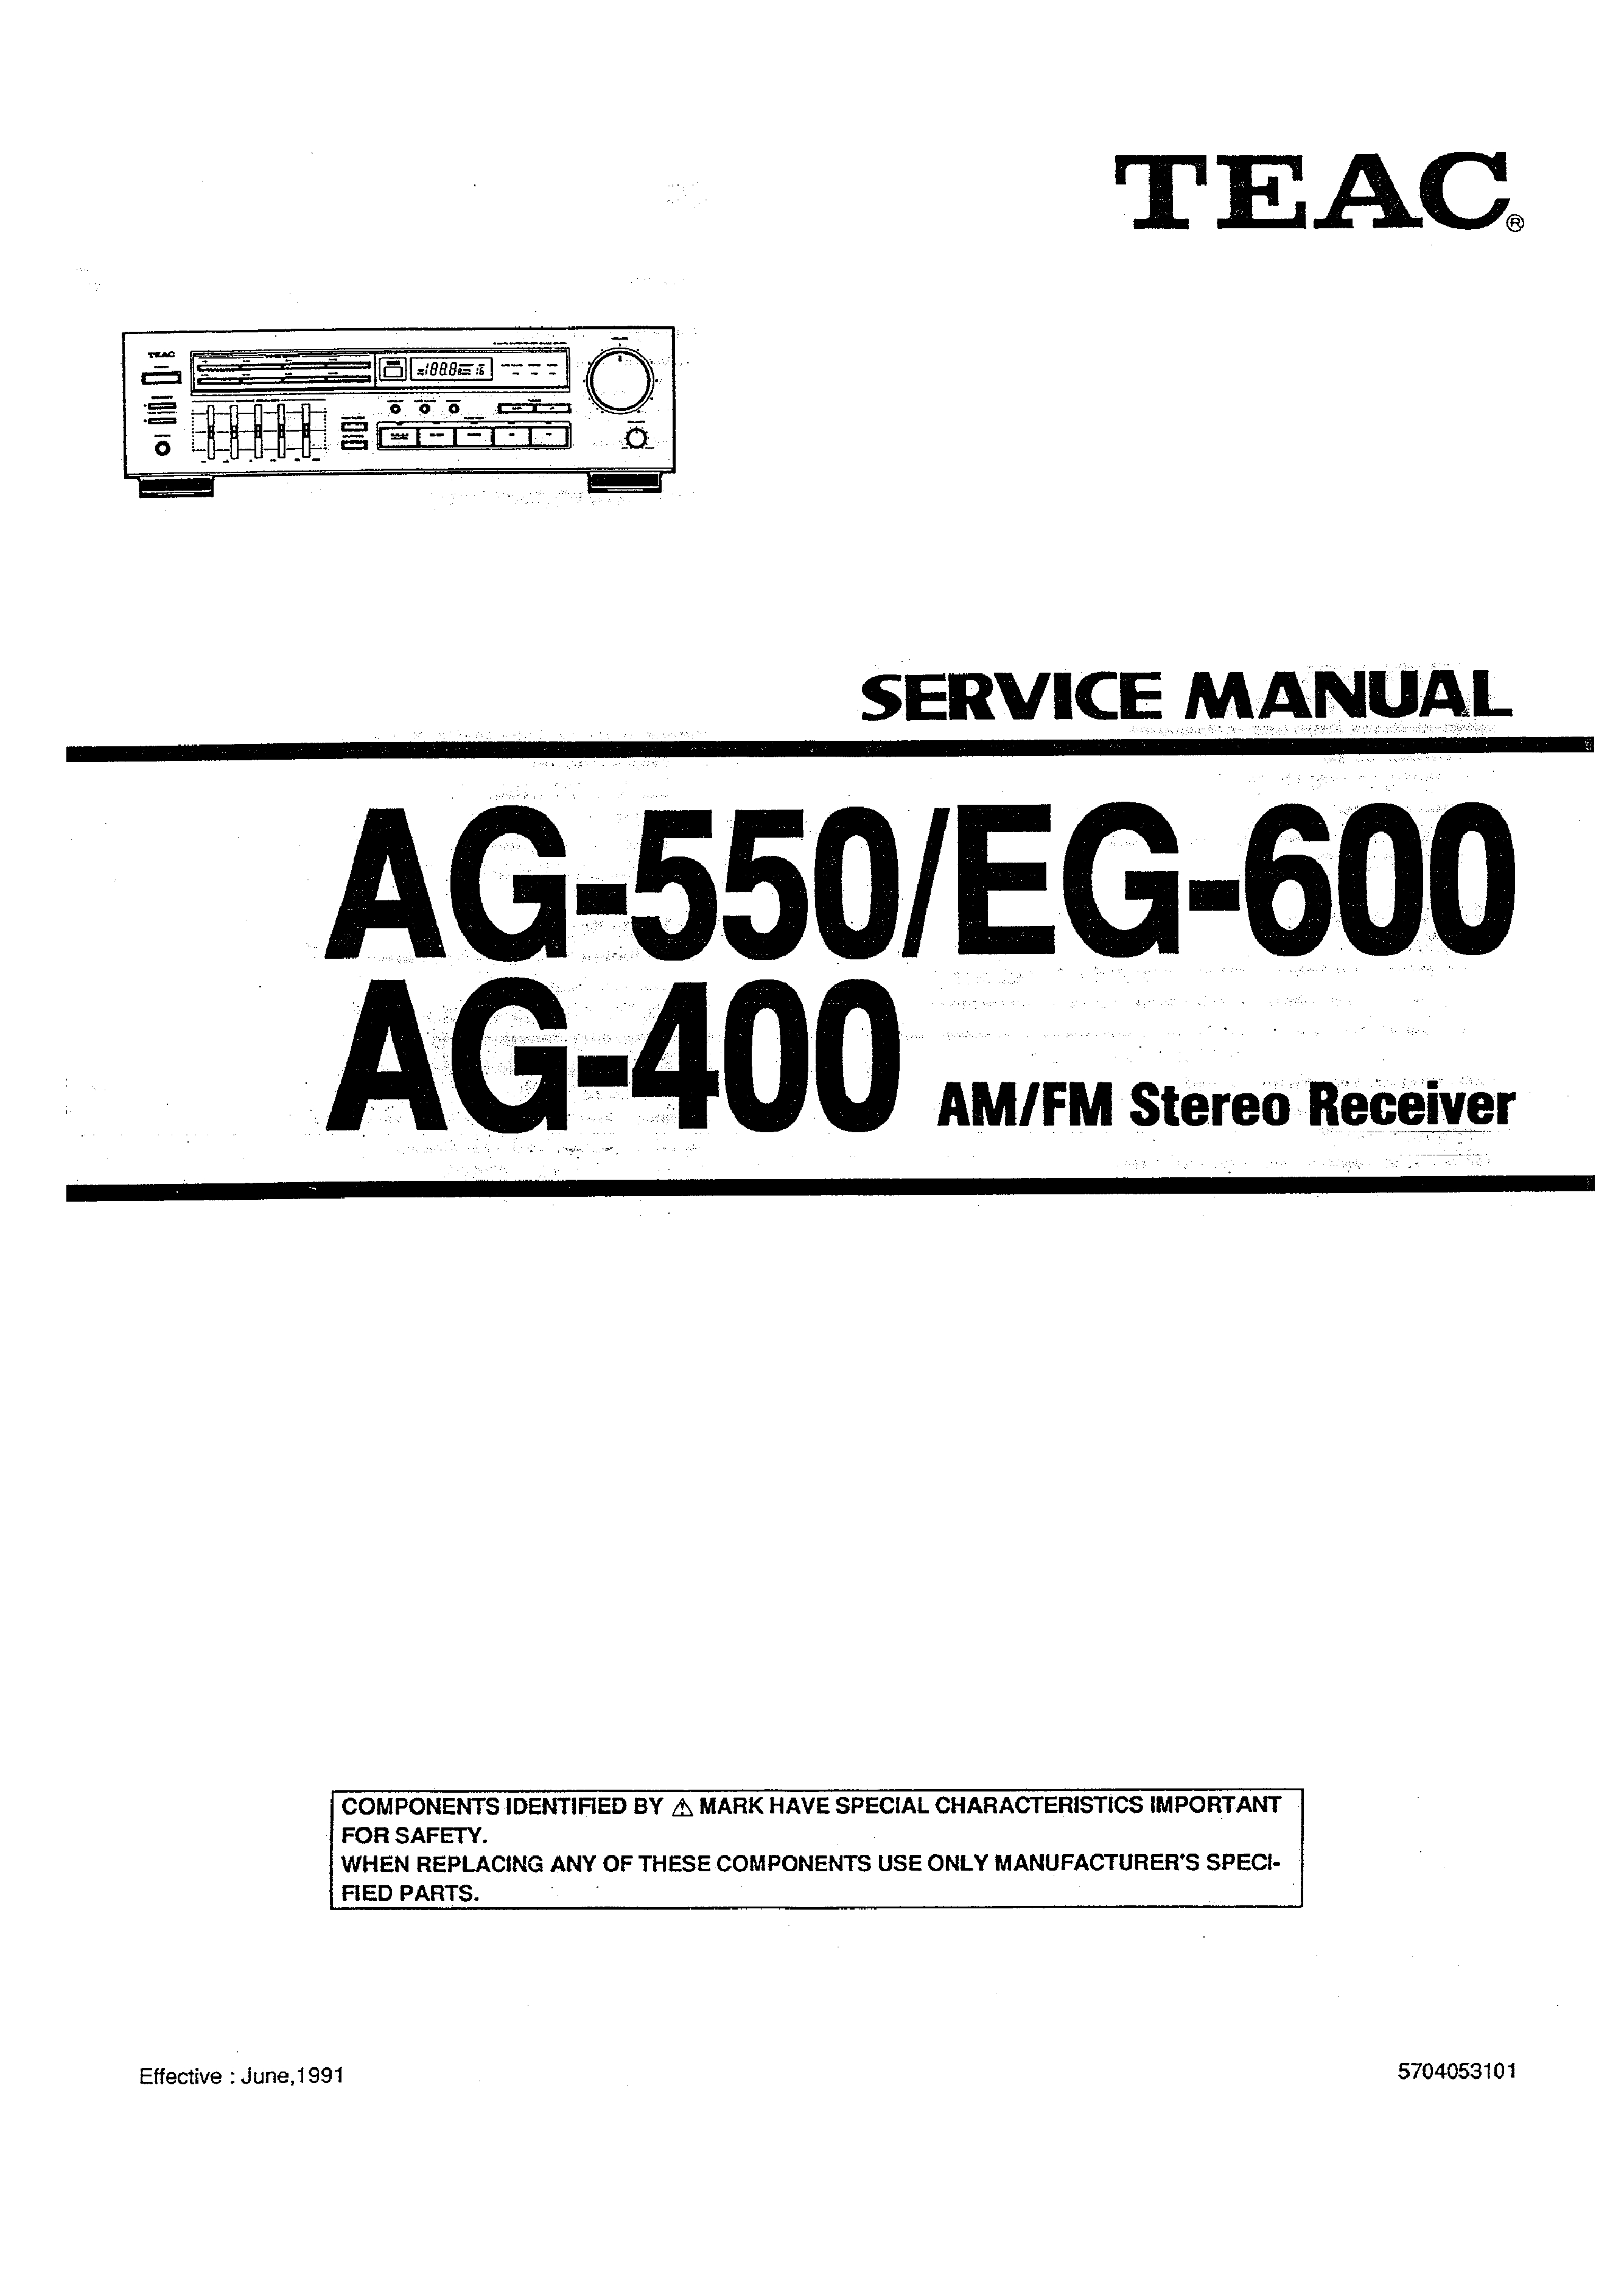 TEAC AG-550 - Service Manual Immediate Download